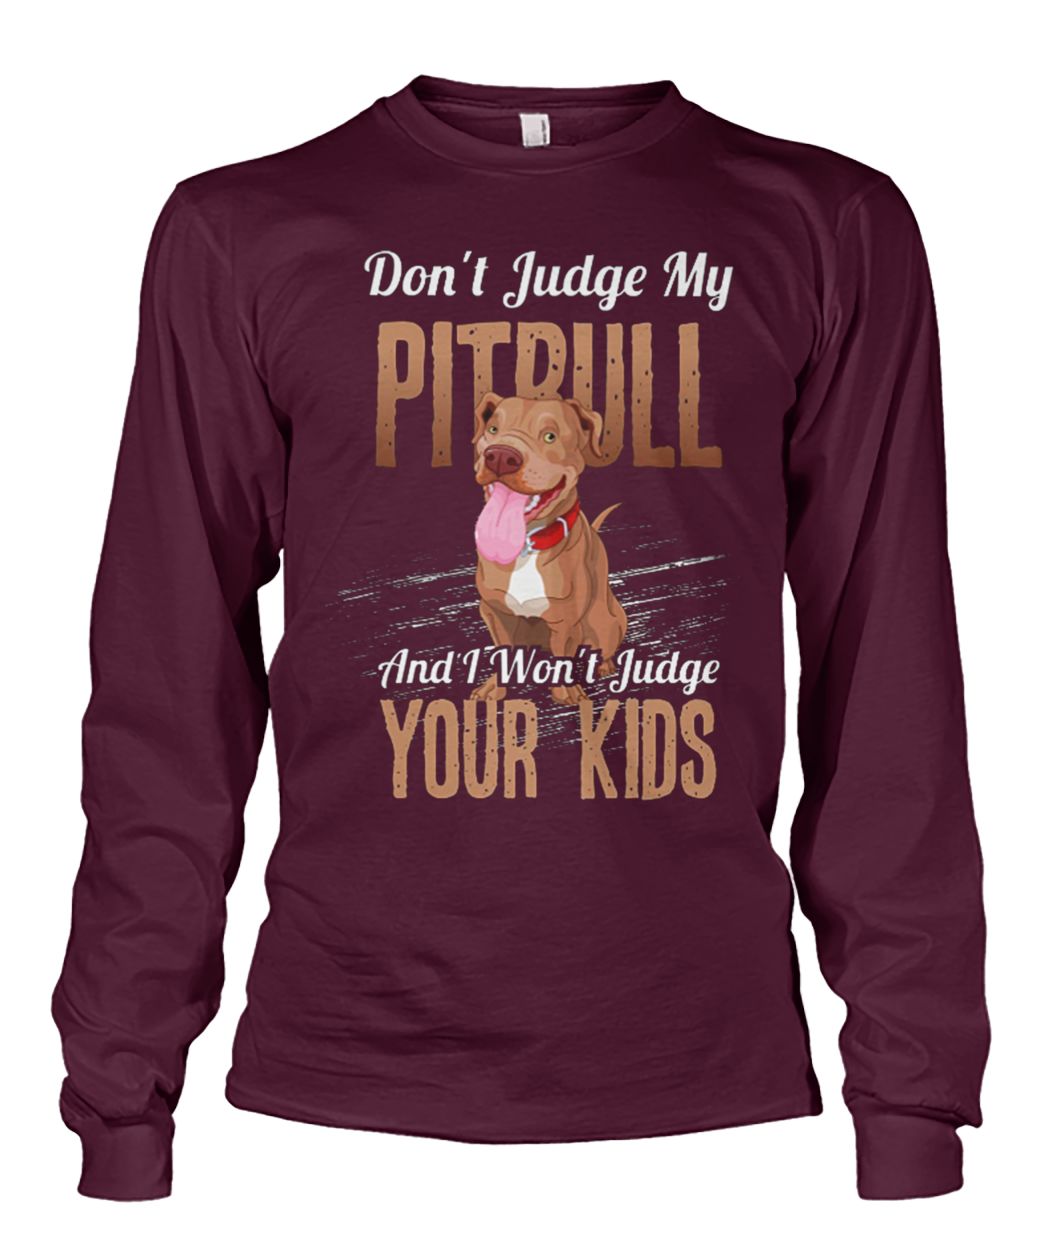 Don't judge my pitbull and I won't judge your kids unisex long sleeve